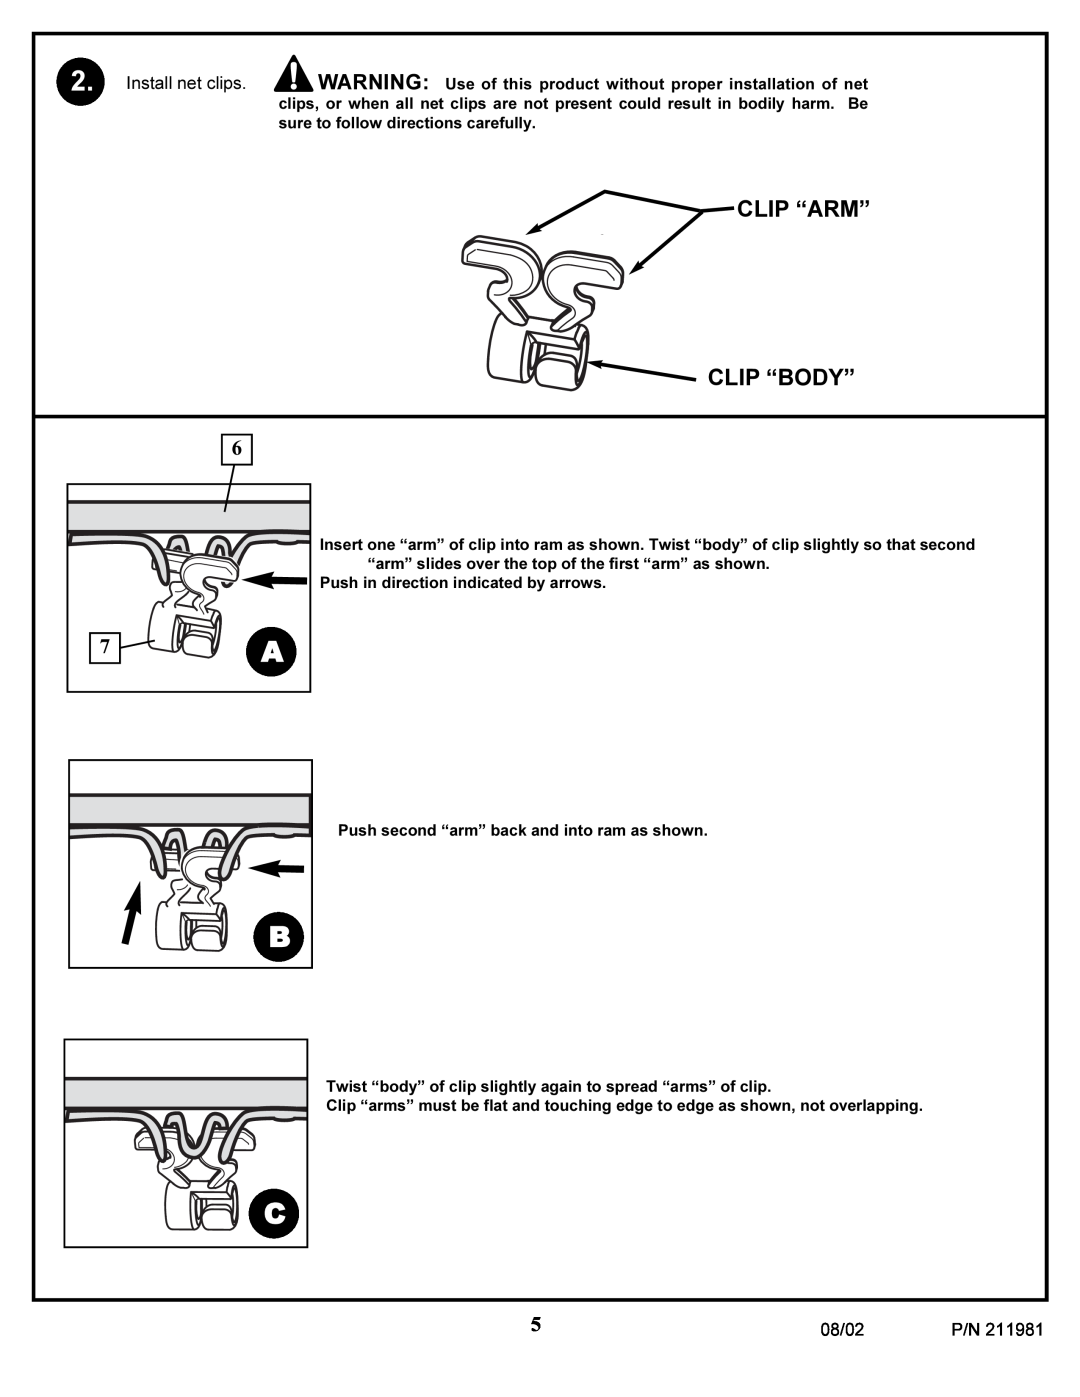 Huffy 2002 manual 7 A, Clip “Arm” Clip “Body” 